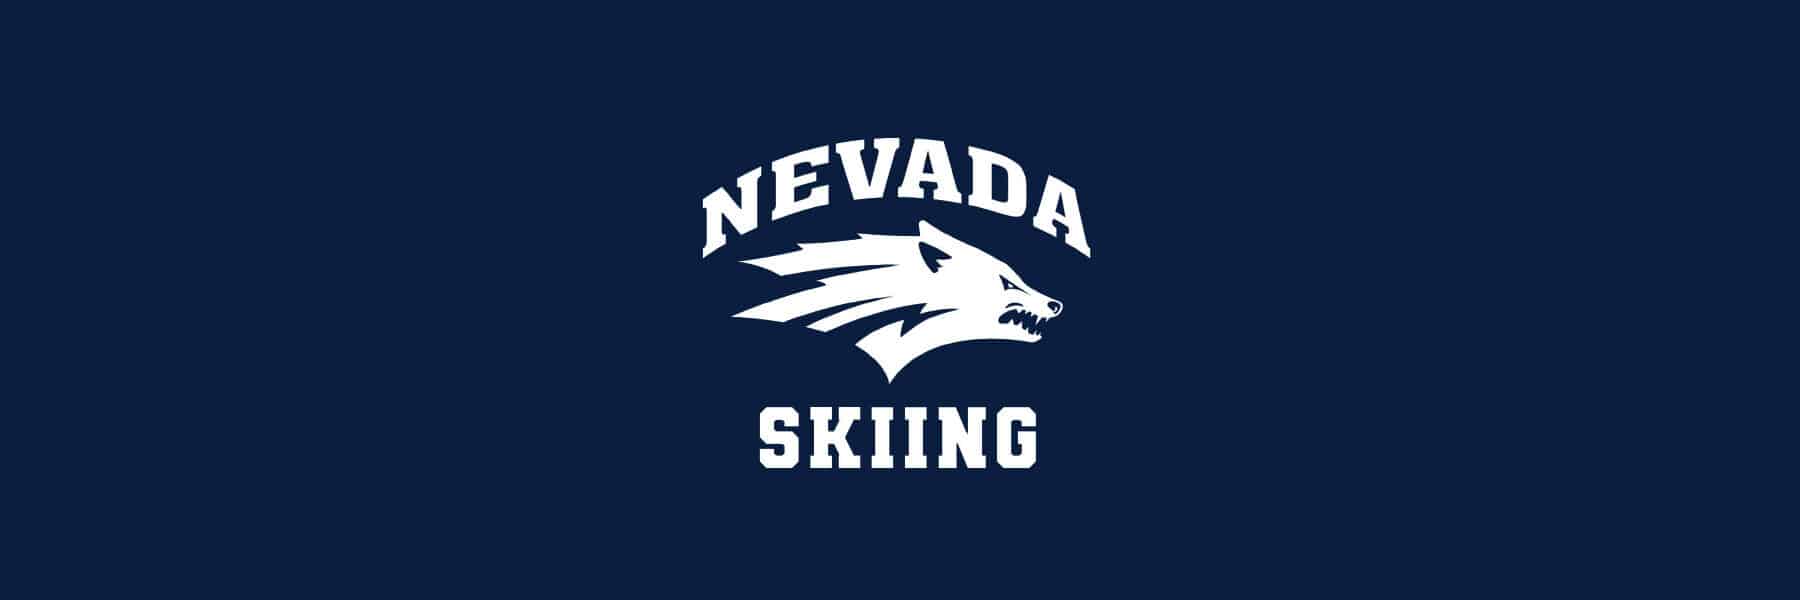 Cameron Smith named Nevada Ski Team head coach